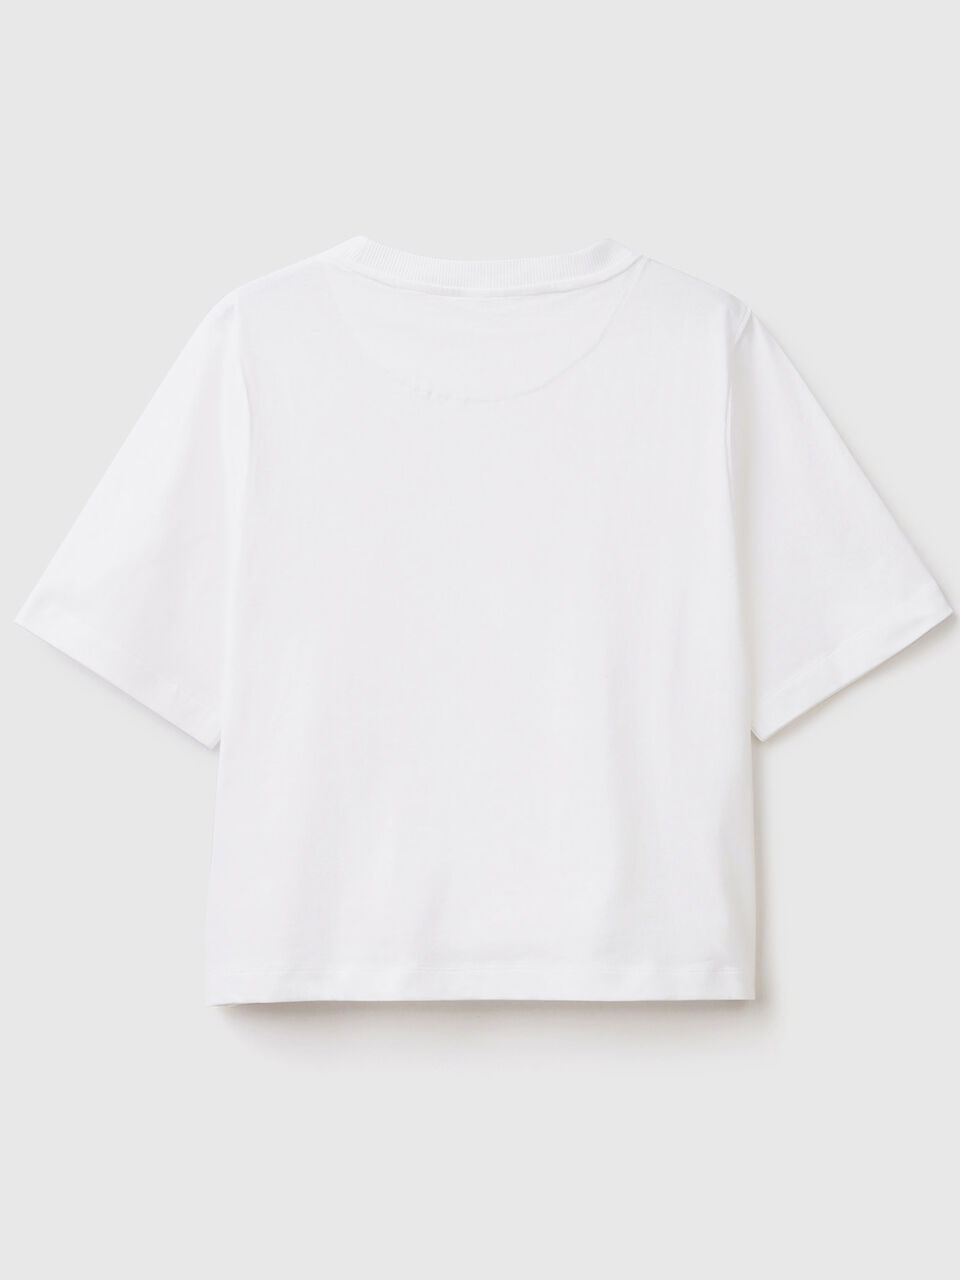 100% cotton women's white t-shirt - Bread&Boxers